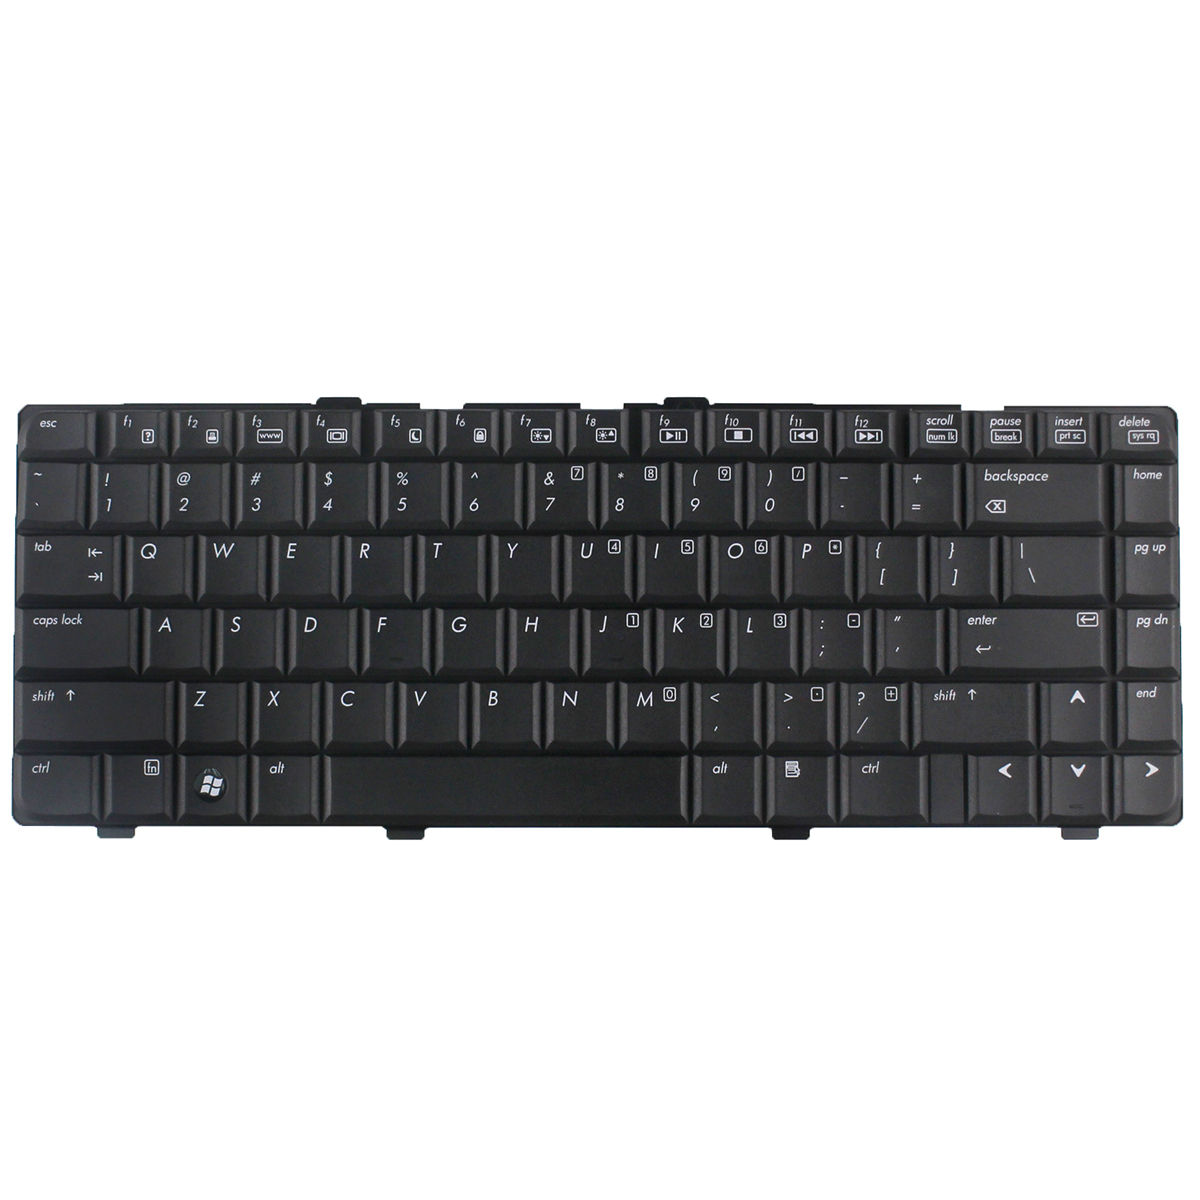 New Keyboard for HP Pavilion DV6000 Series Laptops 441427-001 43